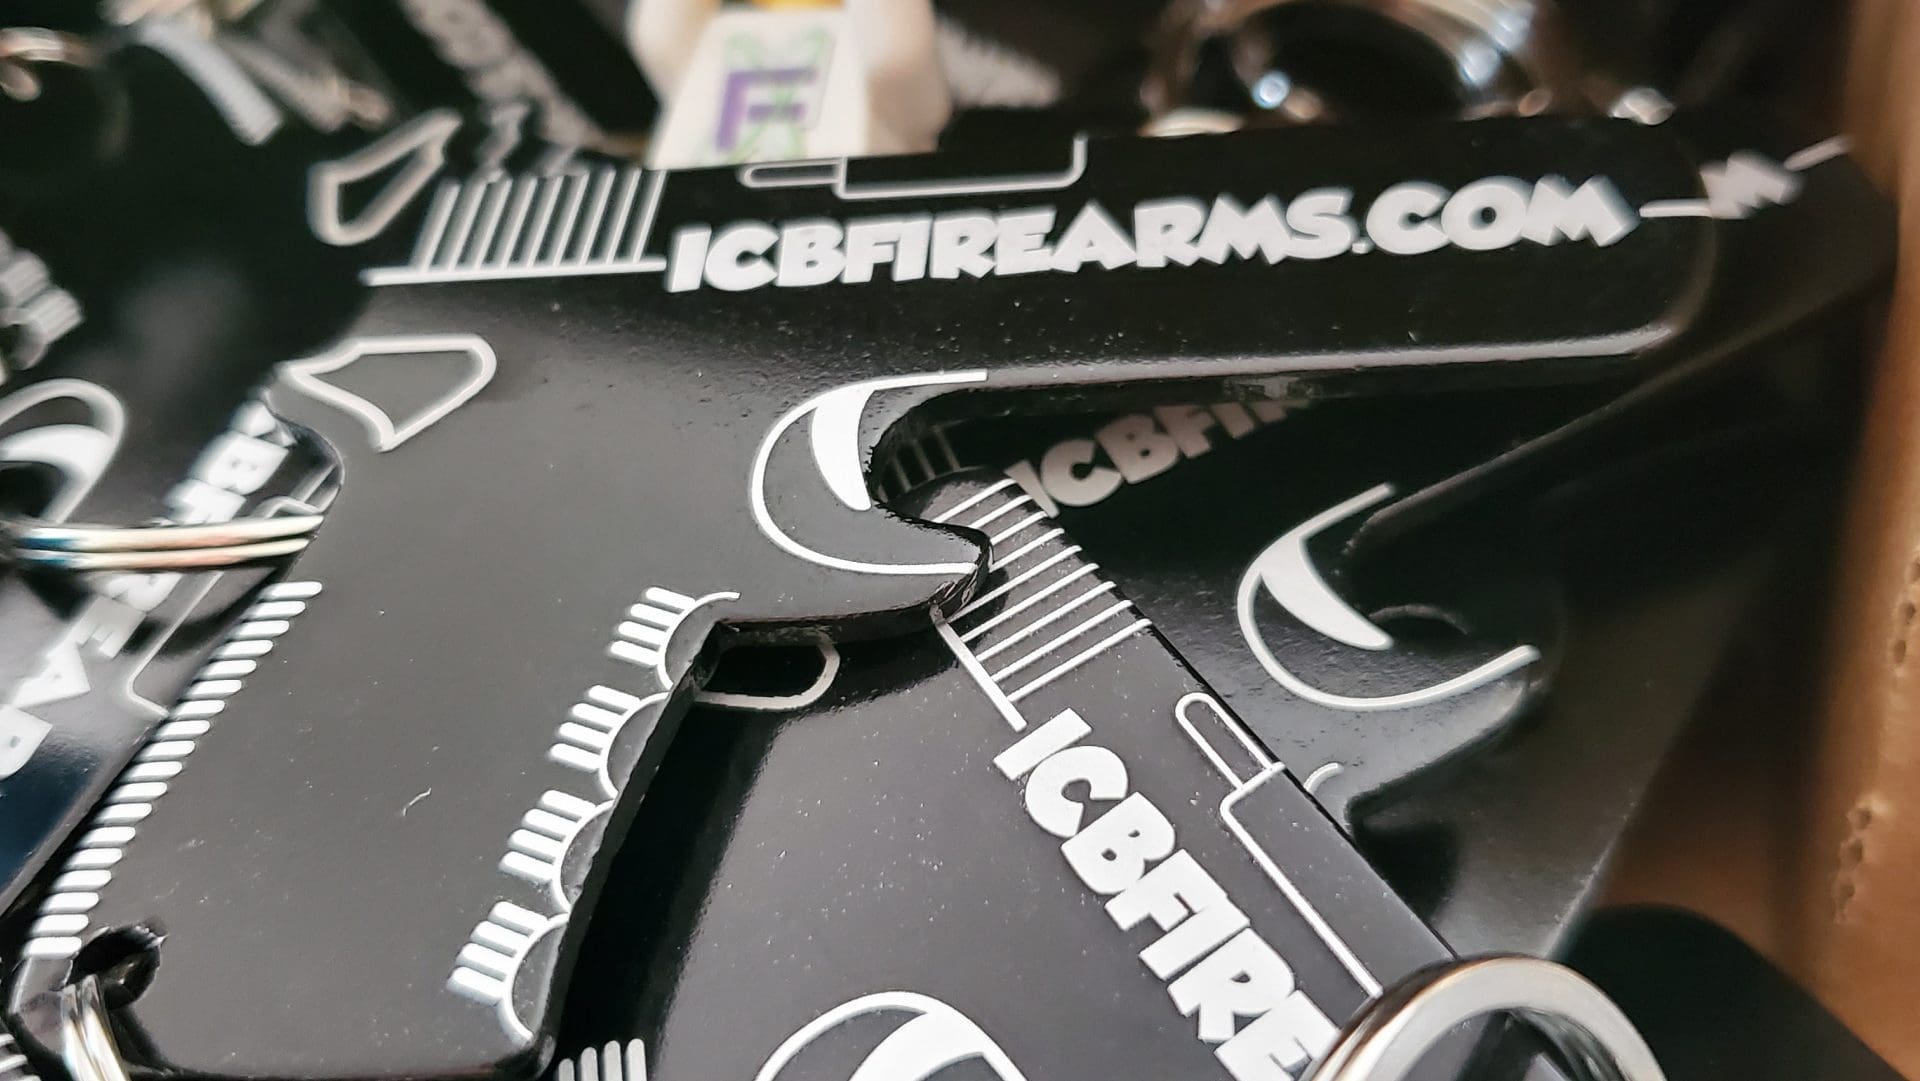 ICB Firearms - Gun Key chain Bottle Opener Lego Photo 04